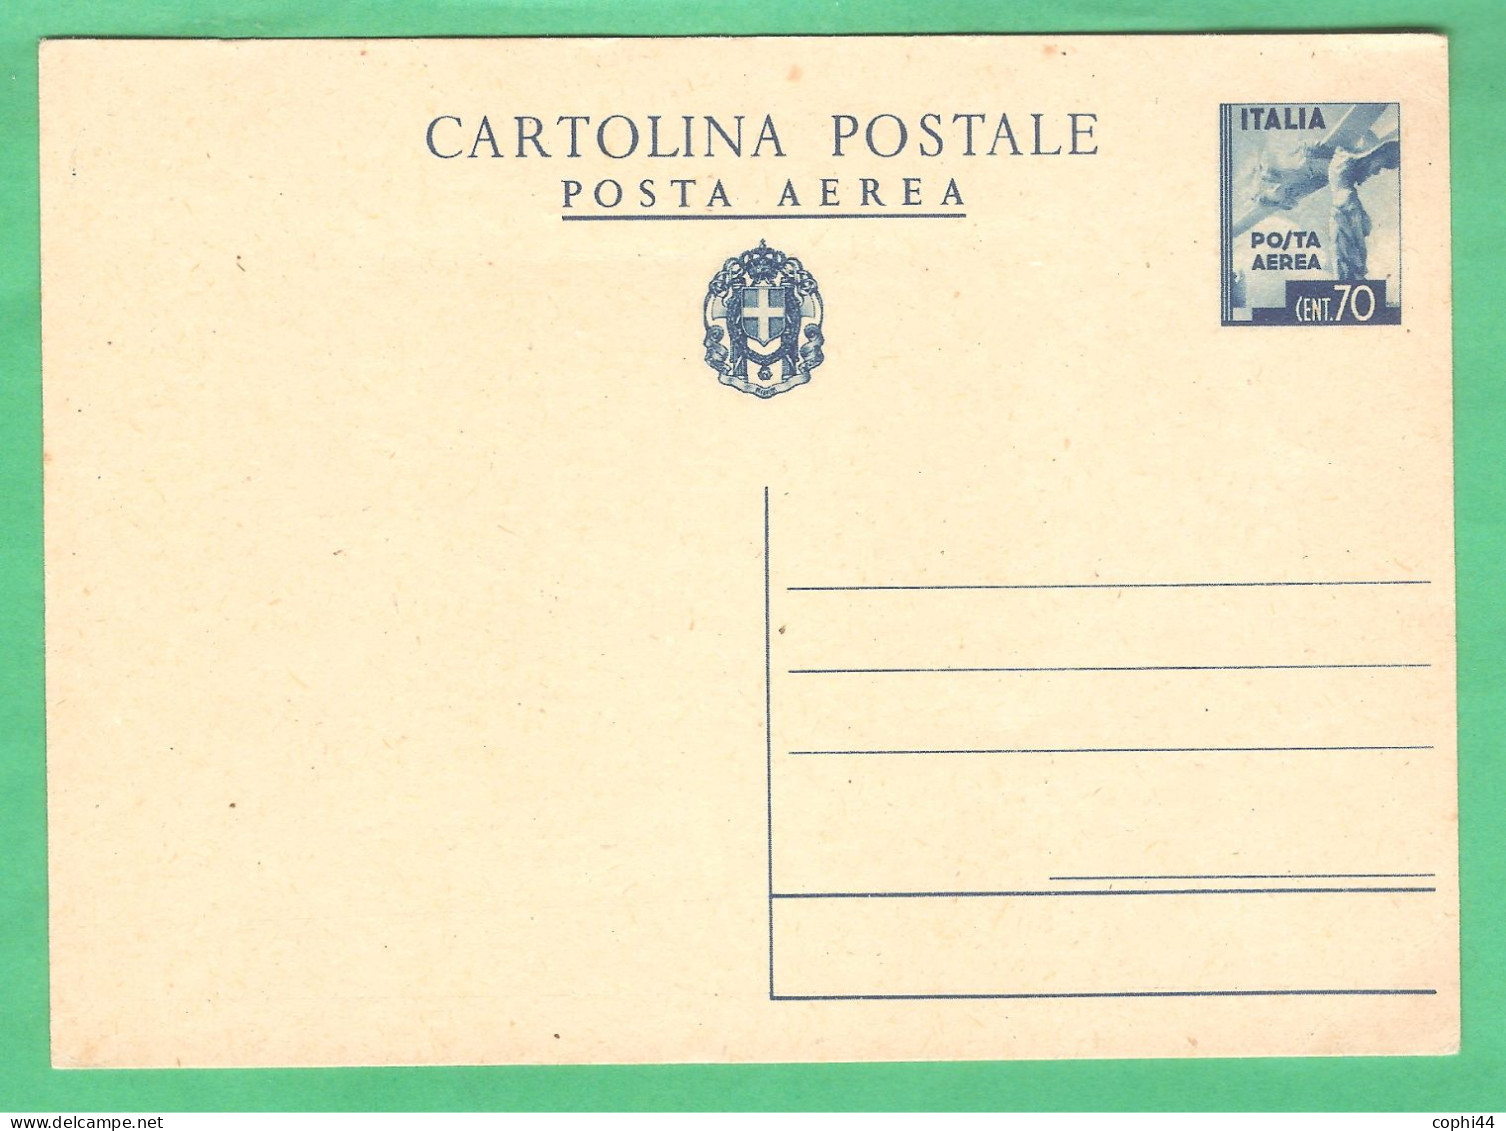 REGNO D'ITALIA 1943 CARTOLINA POSTALE VEIII POSTA AEREA 70 C Turchino (FILAGRANO C100) NUOVA - Interi Postali